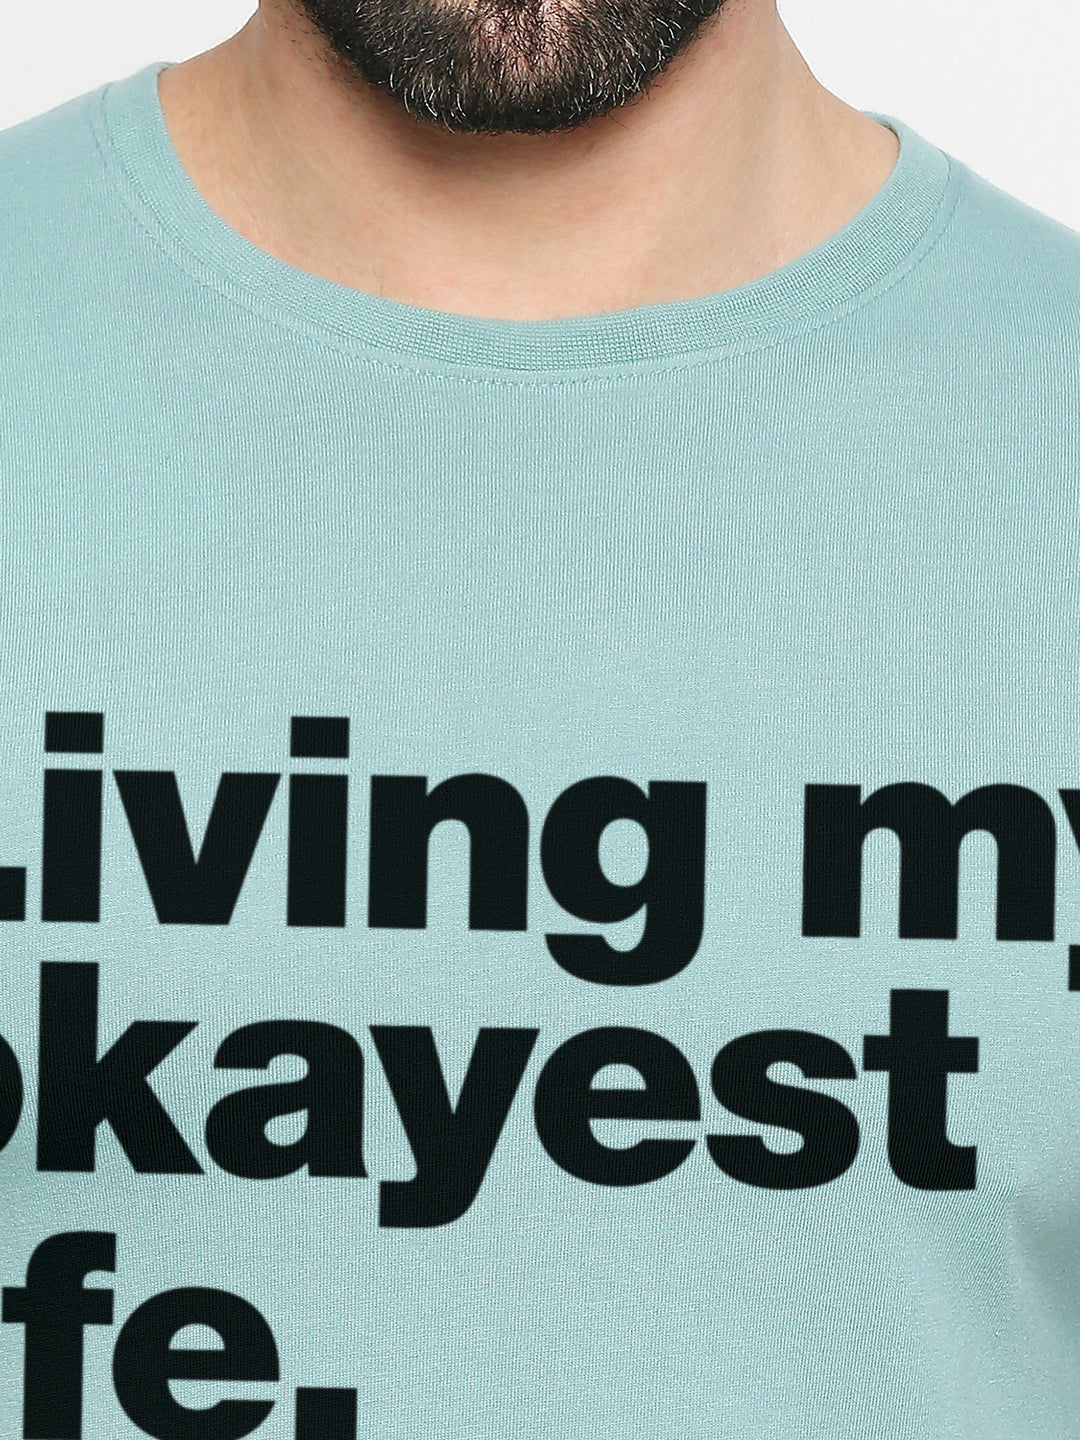 Living My Okayest Life T-Shirt